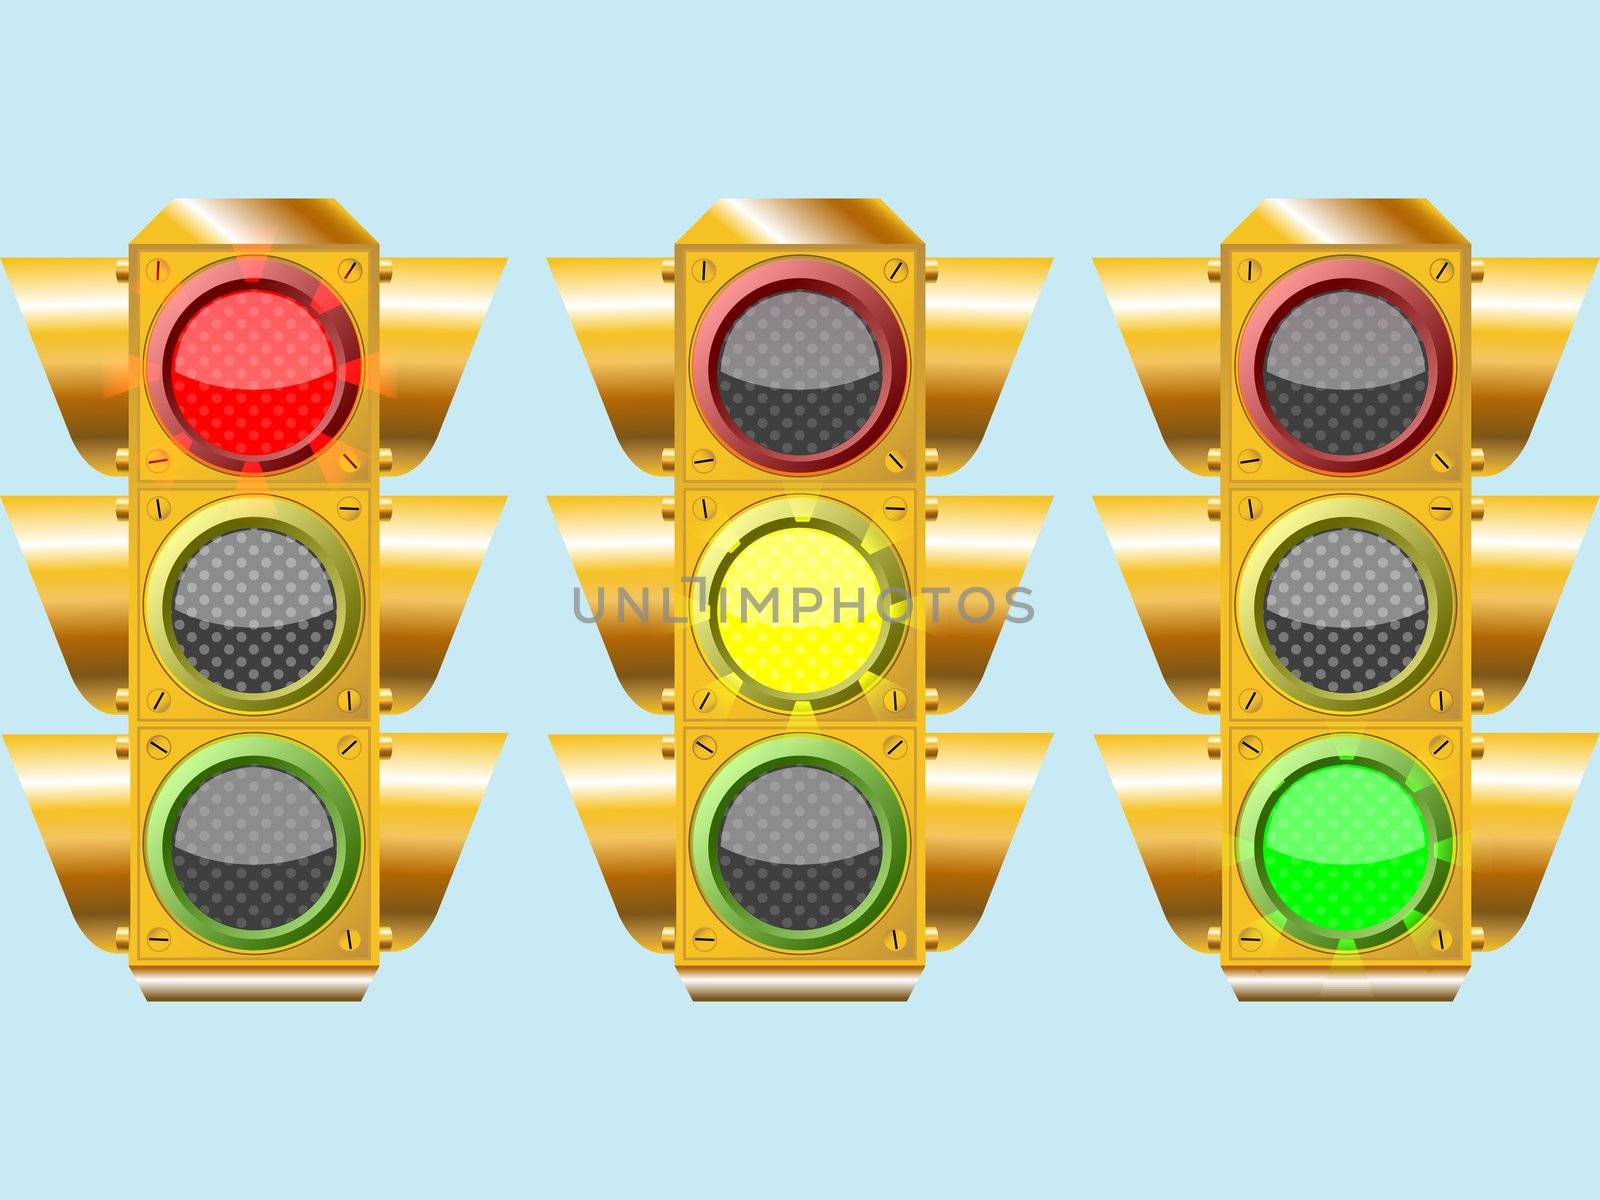 three different traffic lights by robertosch